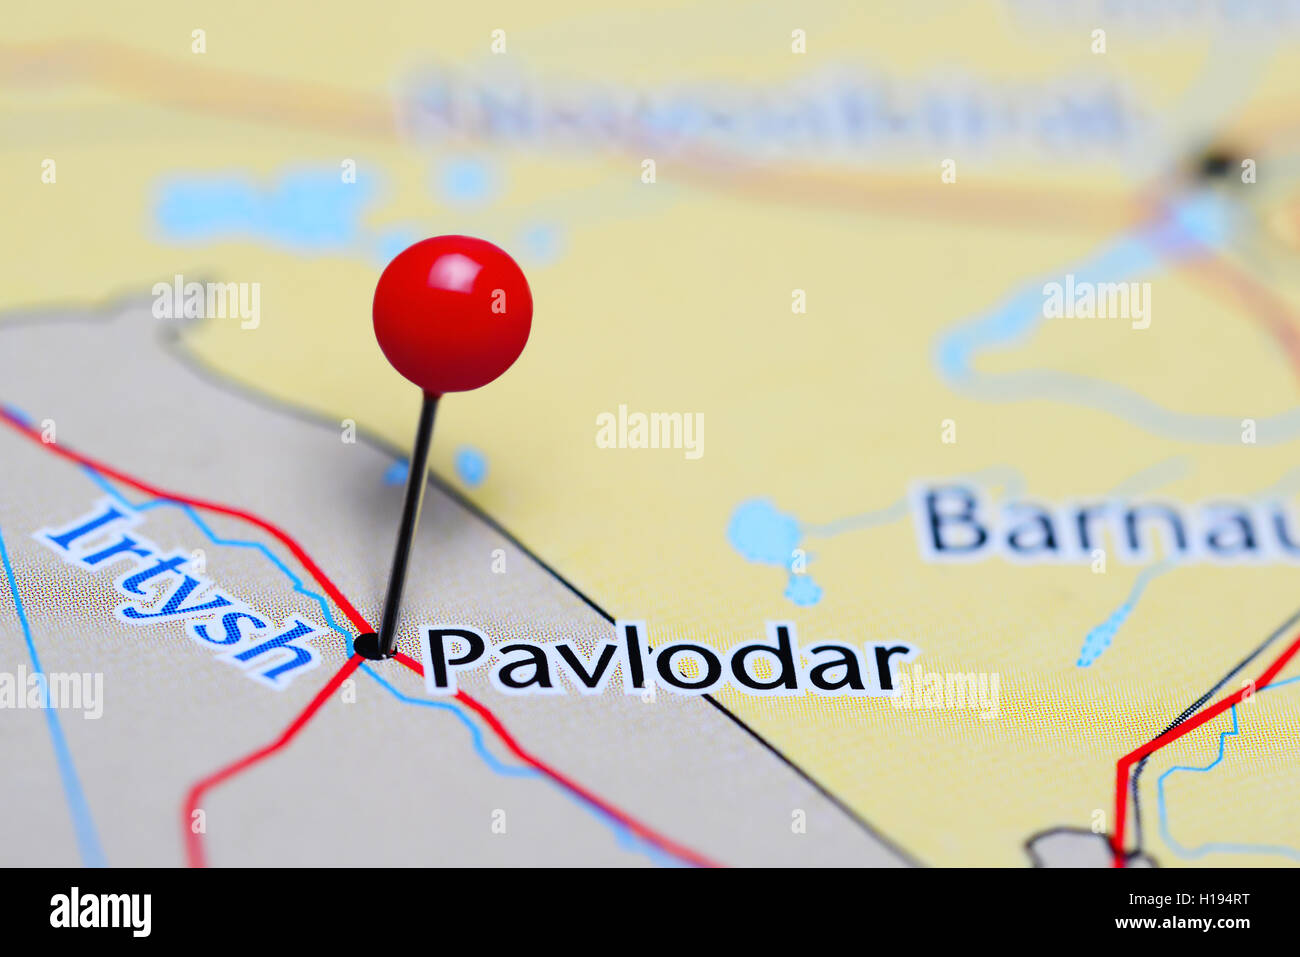 Pavlodar pinned on a map of Kazakhstan Stock Photo